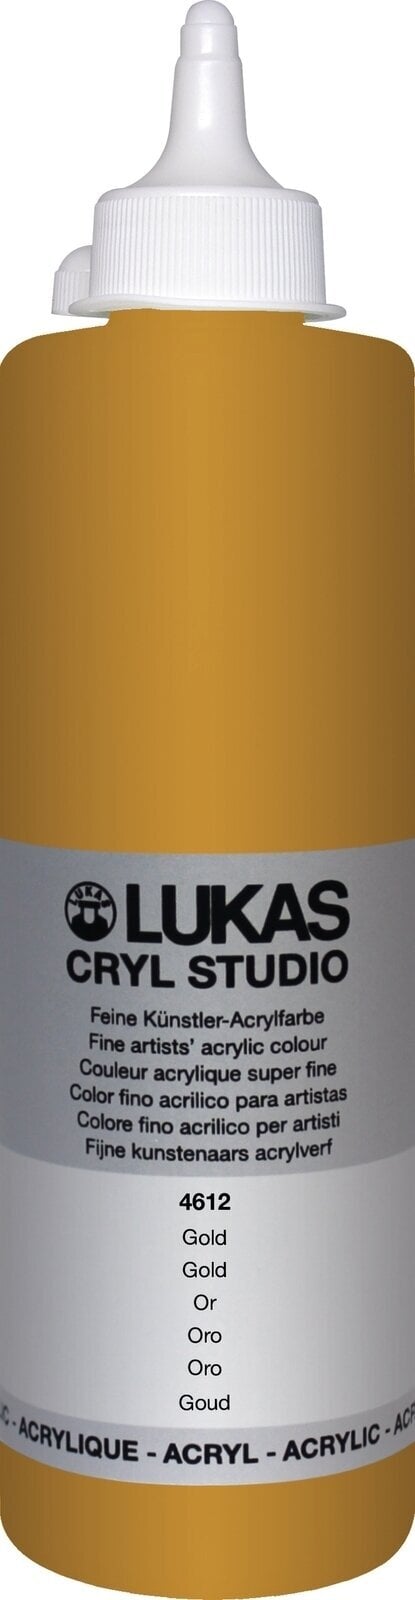 Tinta acrílica Lukas Cryl Studio Tinta acrílica 500 ml Gold